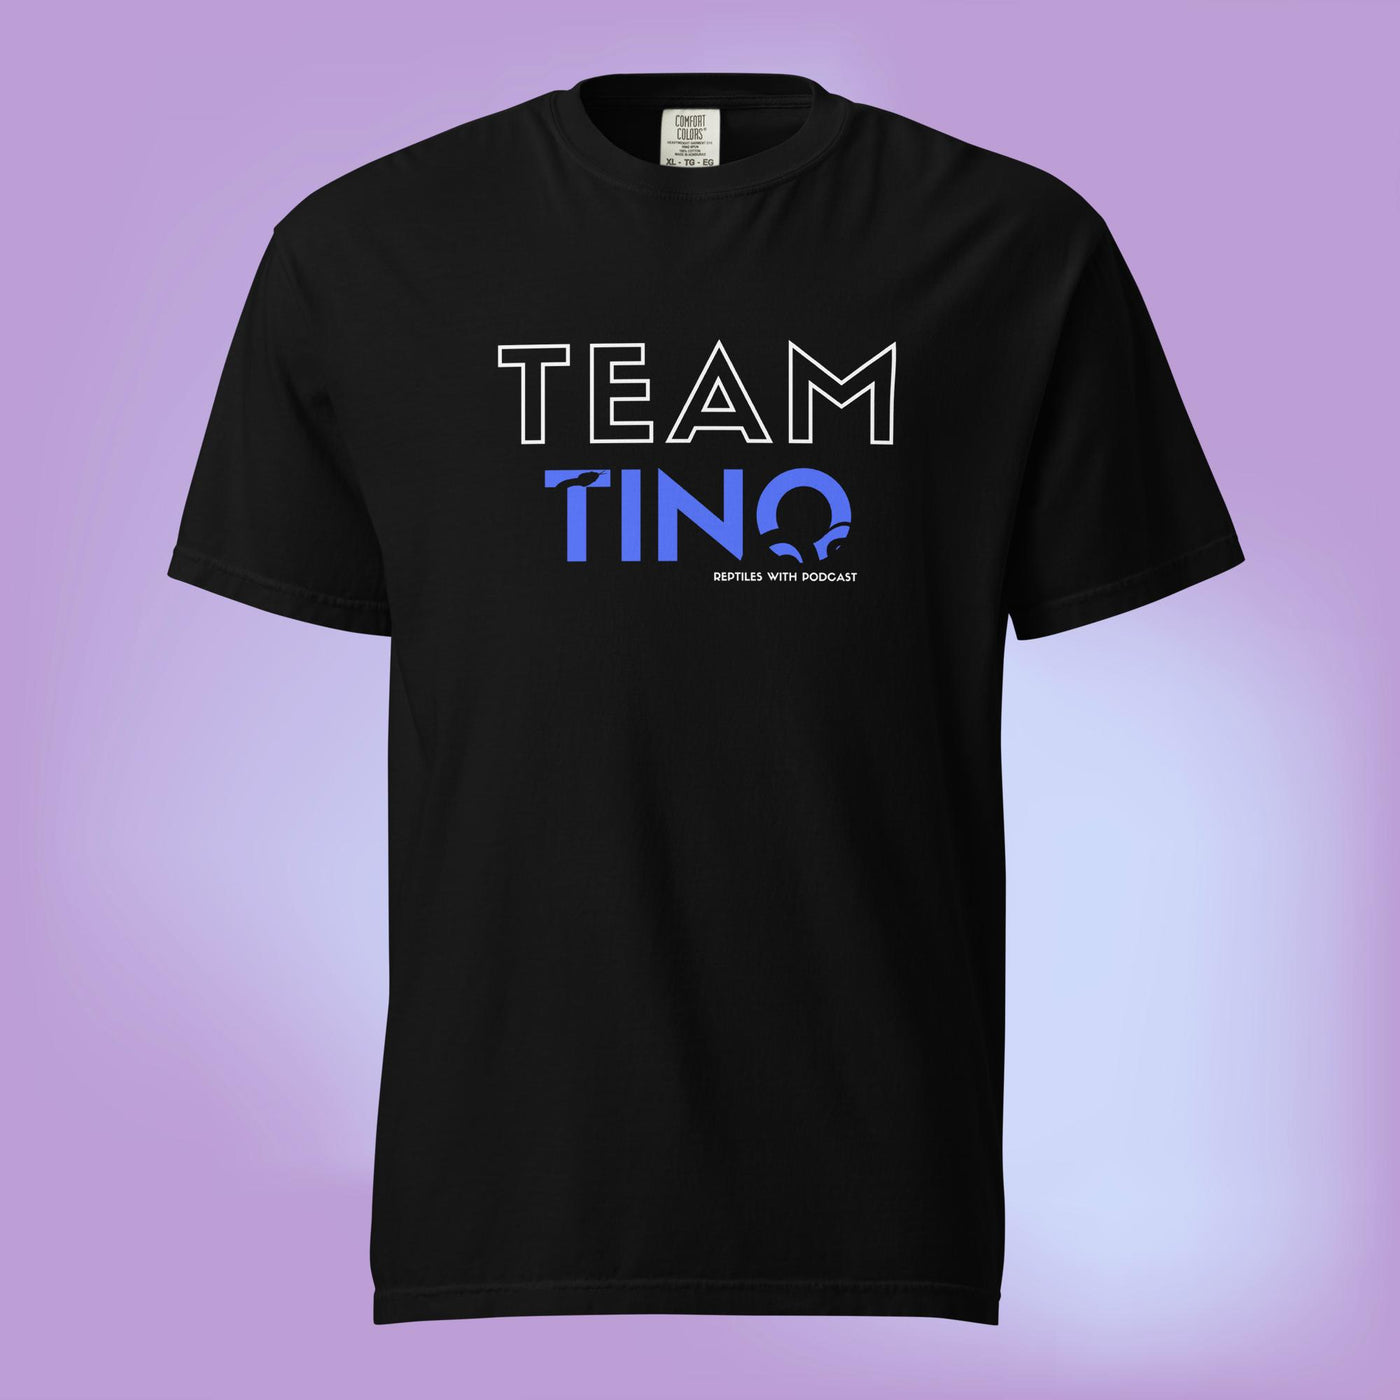 Team Tino t-shirt